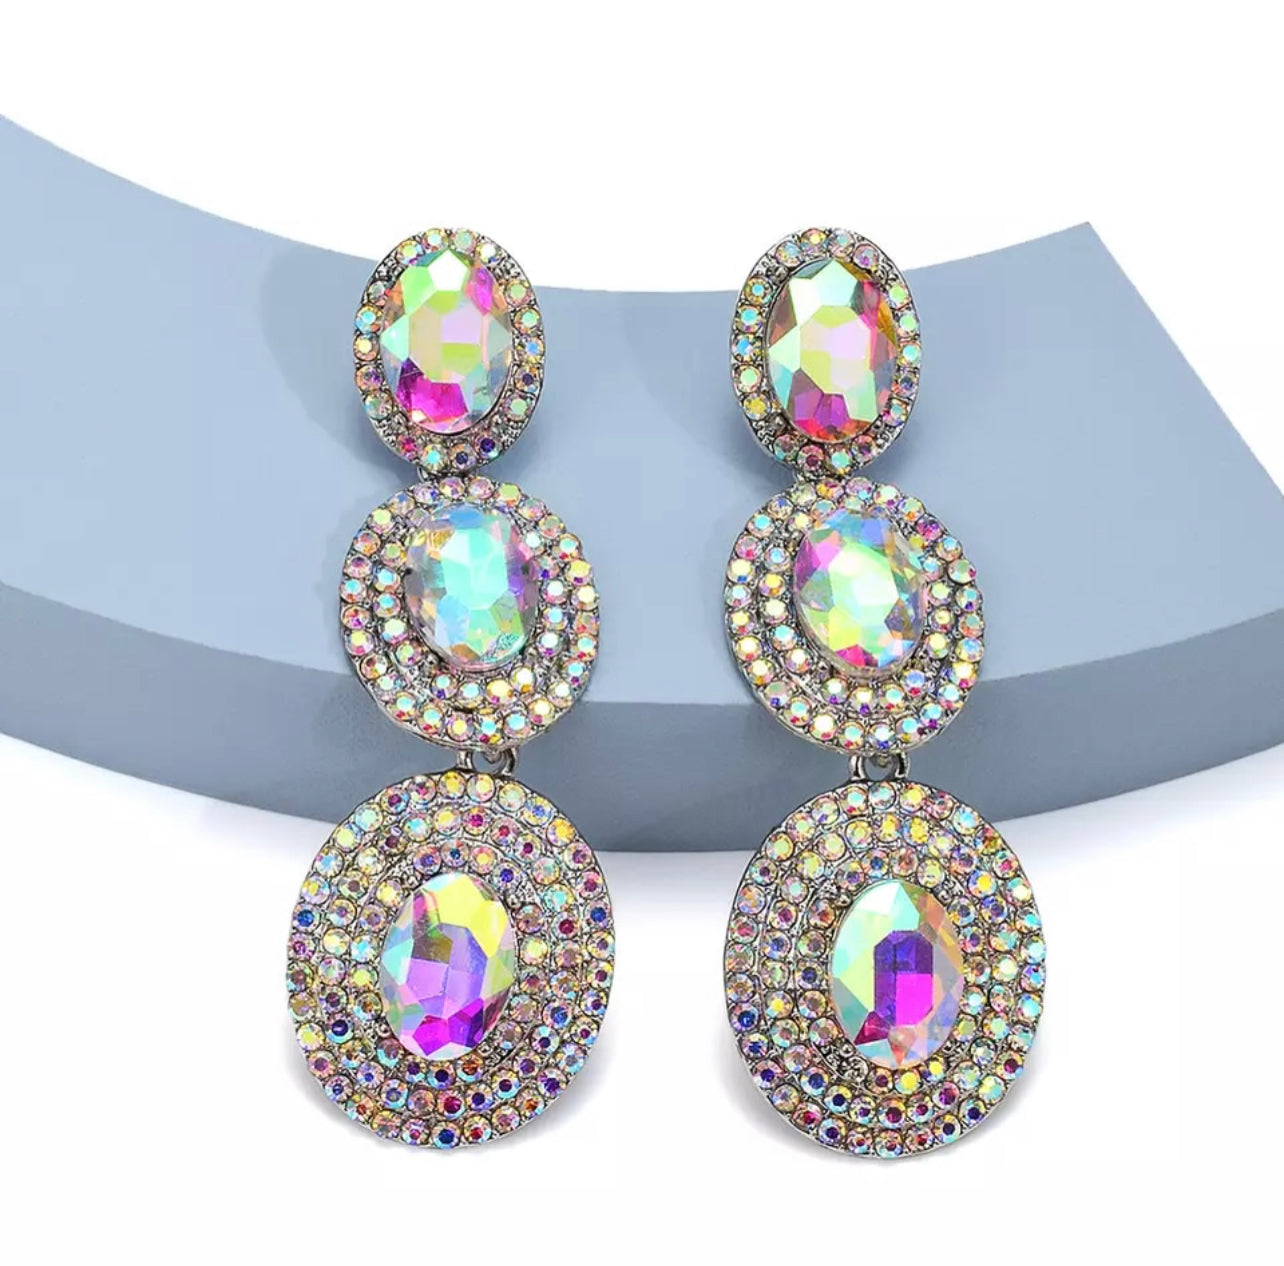 Chan Crystal Earrings (Multi Color Silver)